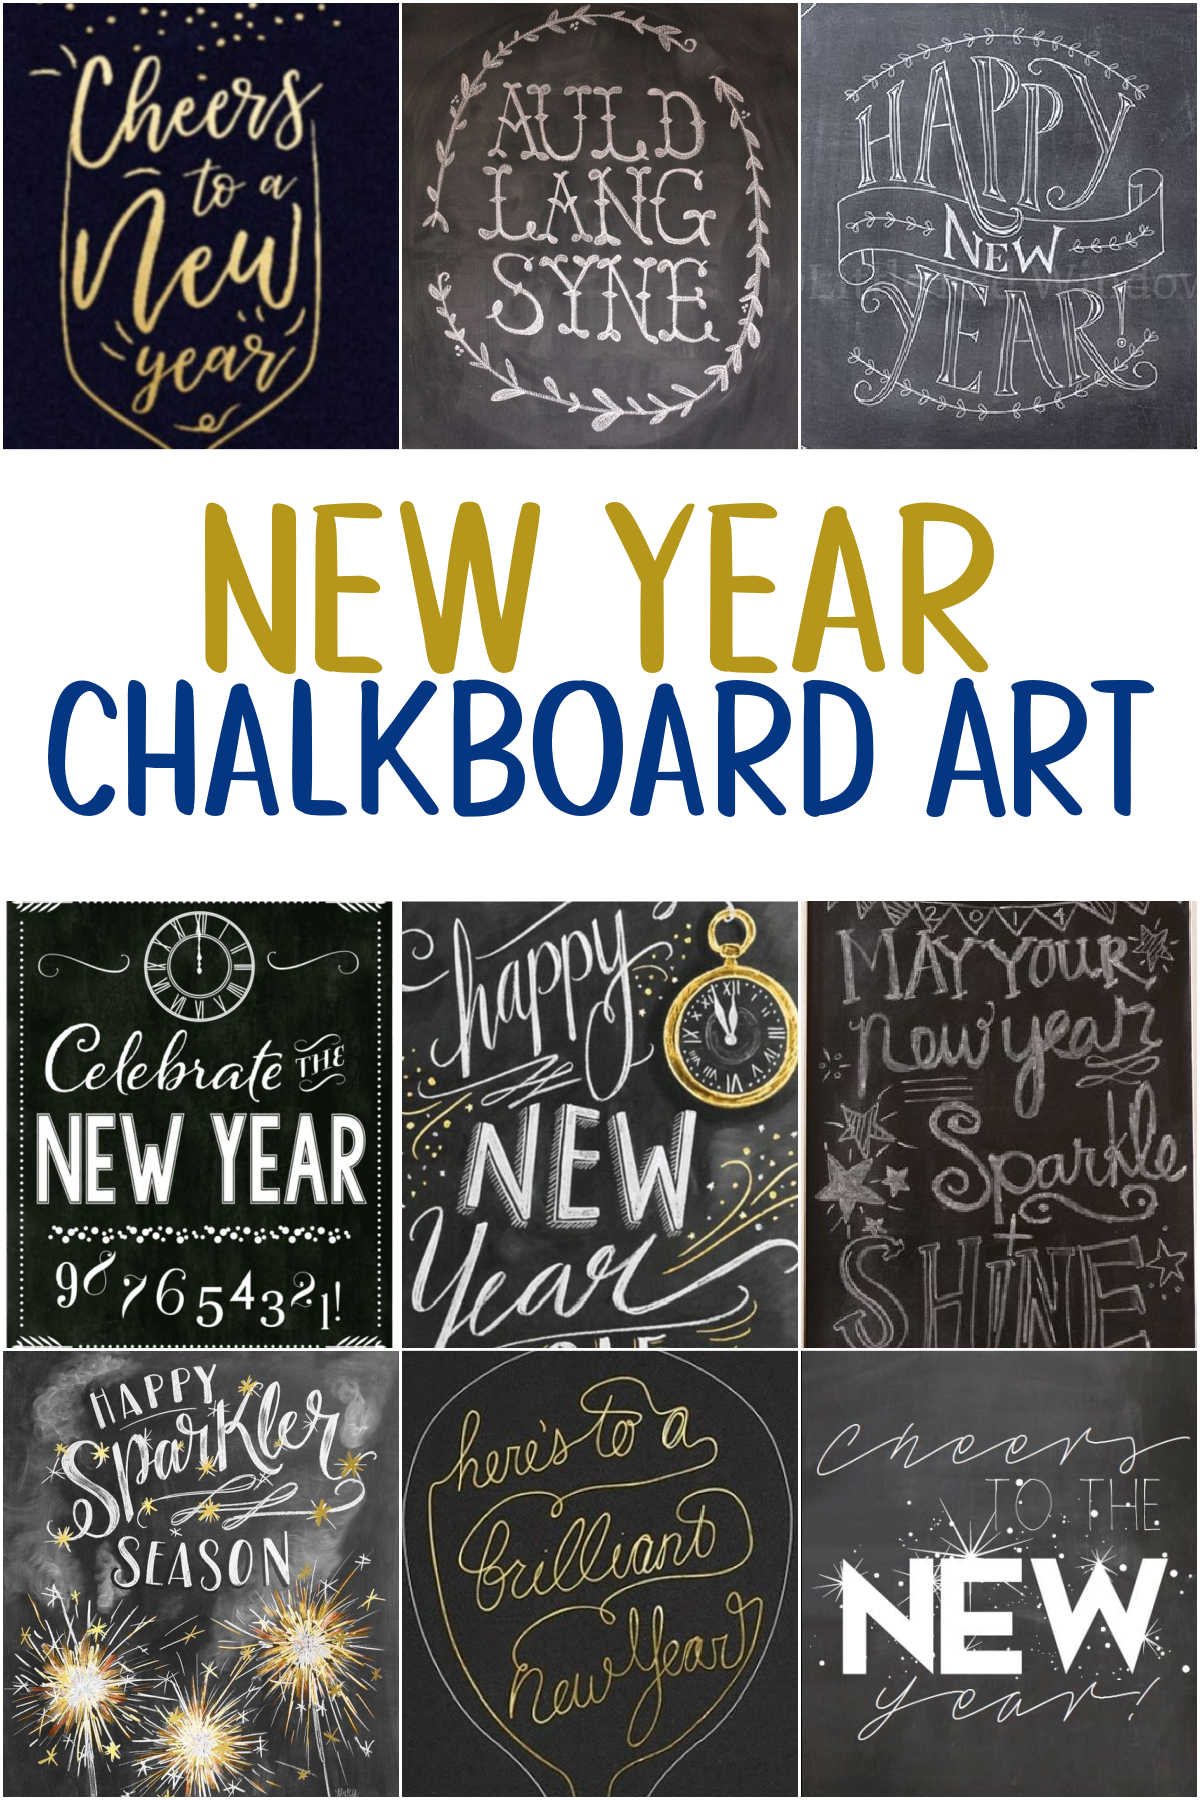 Collage of New Year Chalkboard Art Ideas